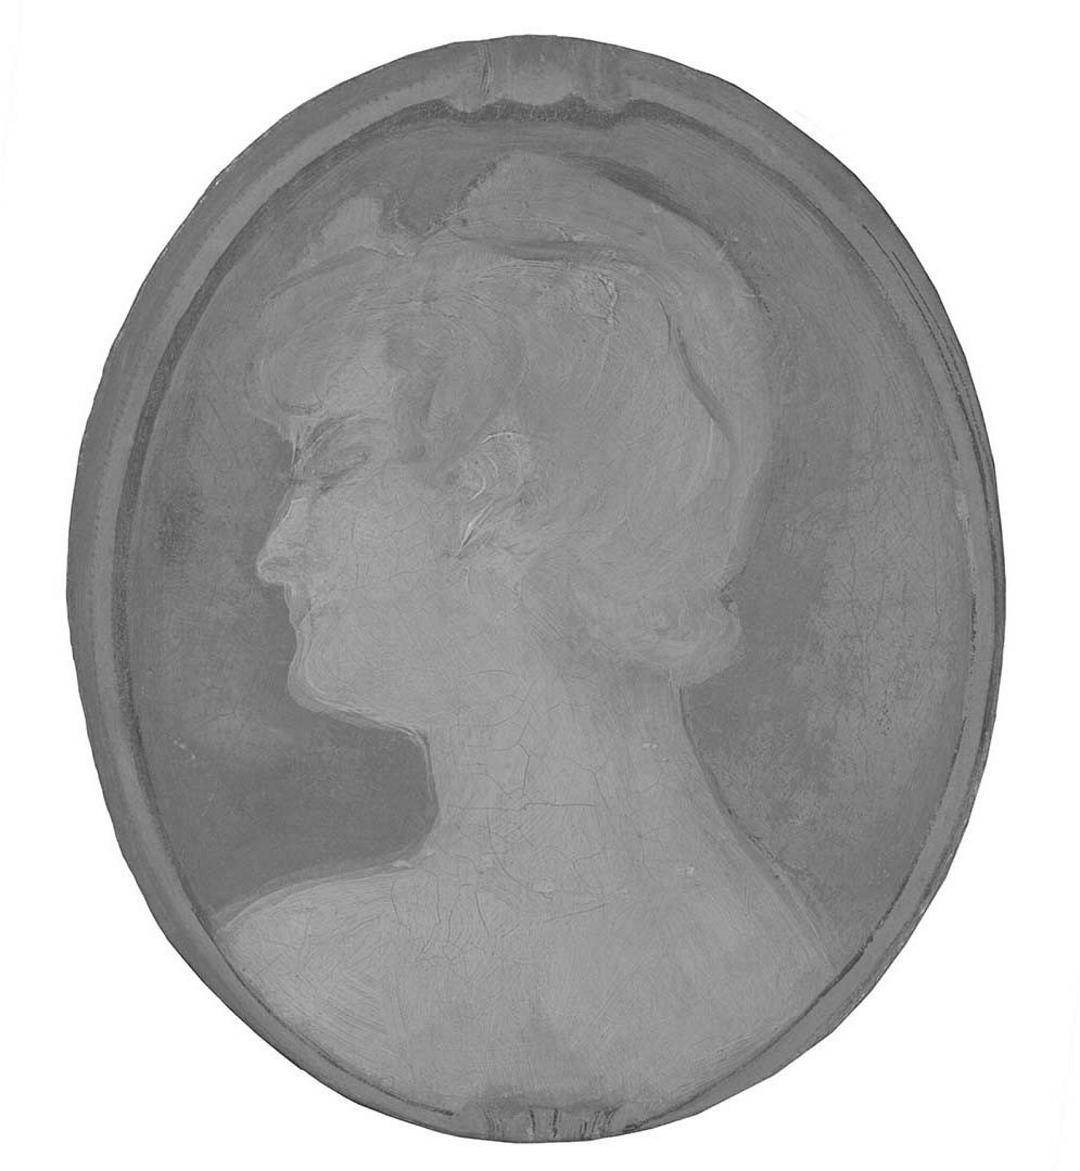 Slider: Near-infrared, Tete de fille (Head of a girl) 1892 